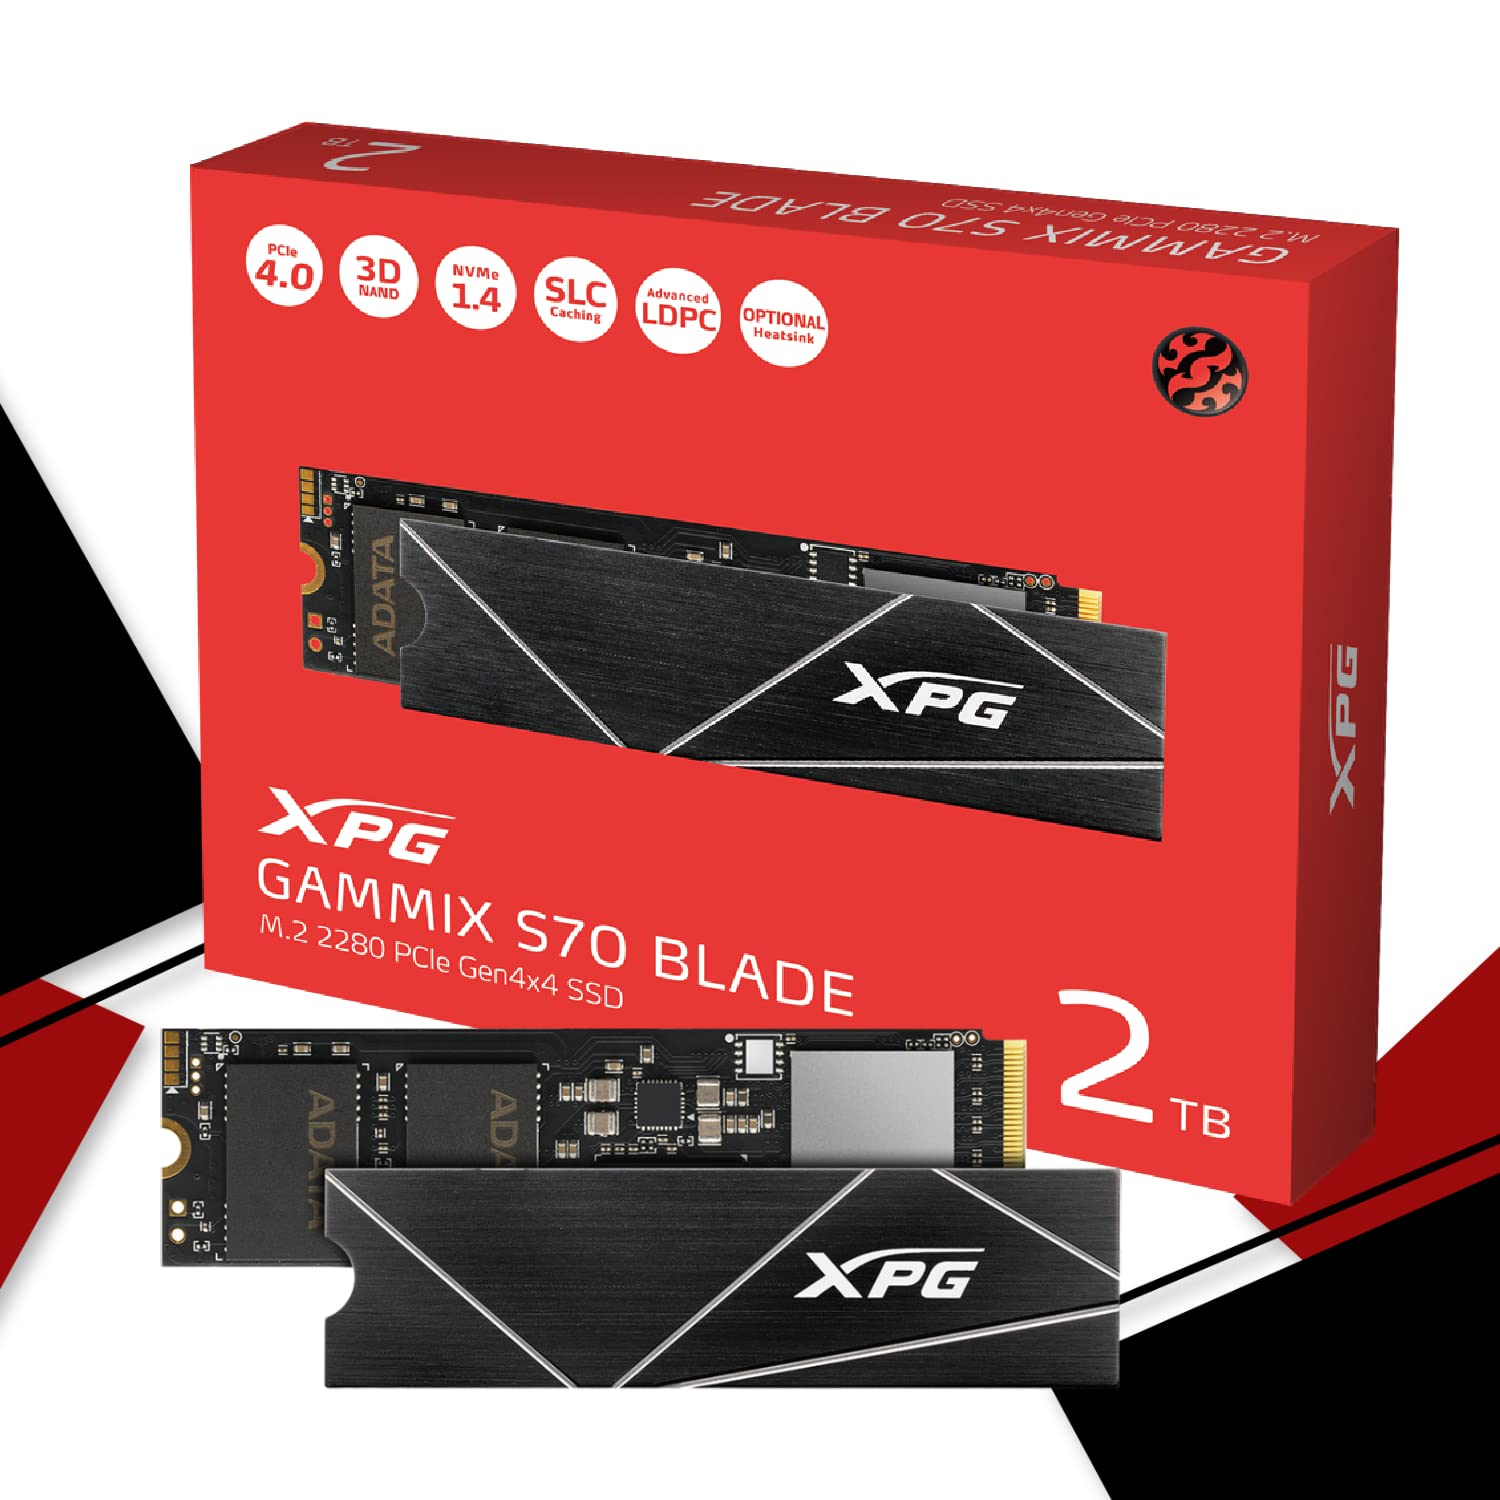 2TB XPG GAMMIX S70 Blade NVMe Gen4 SSD $230